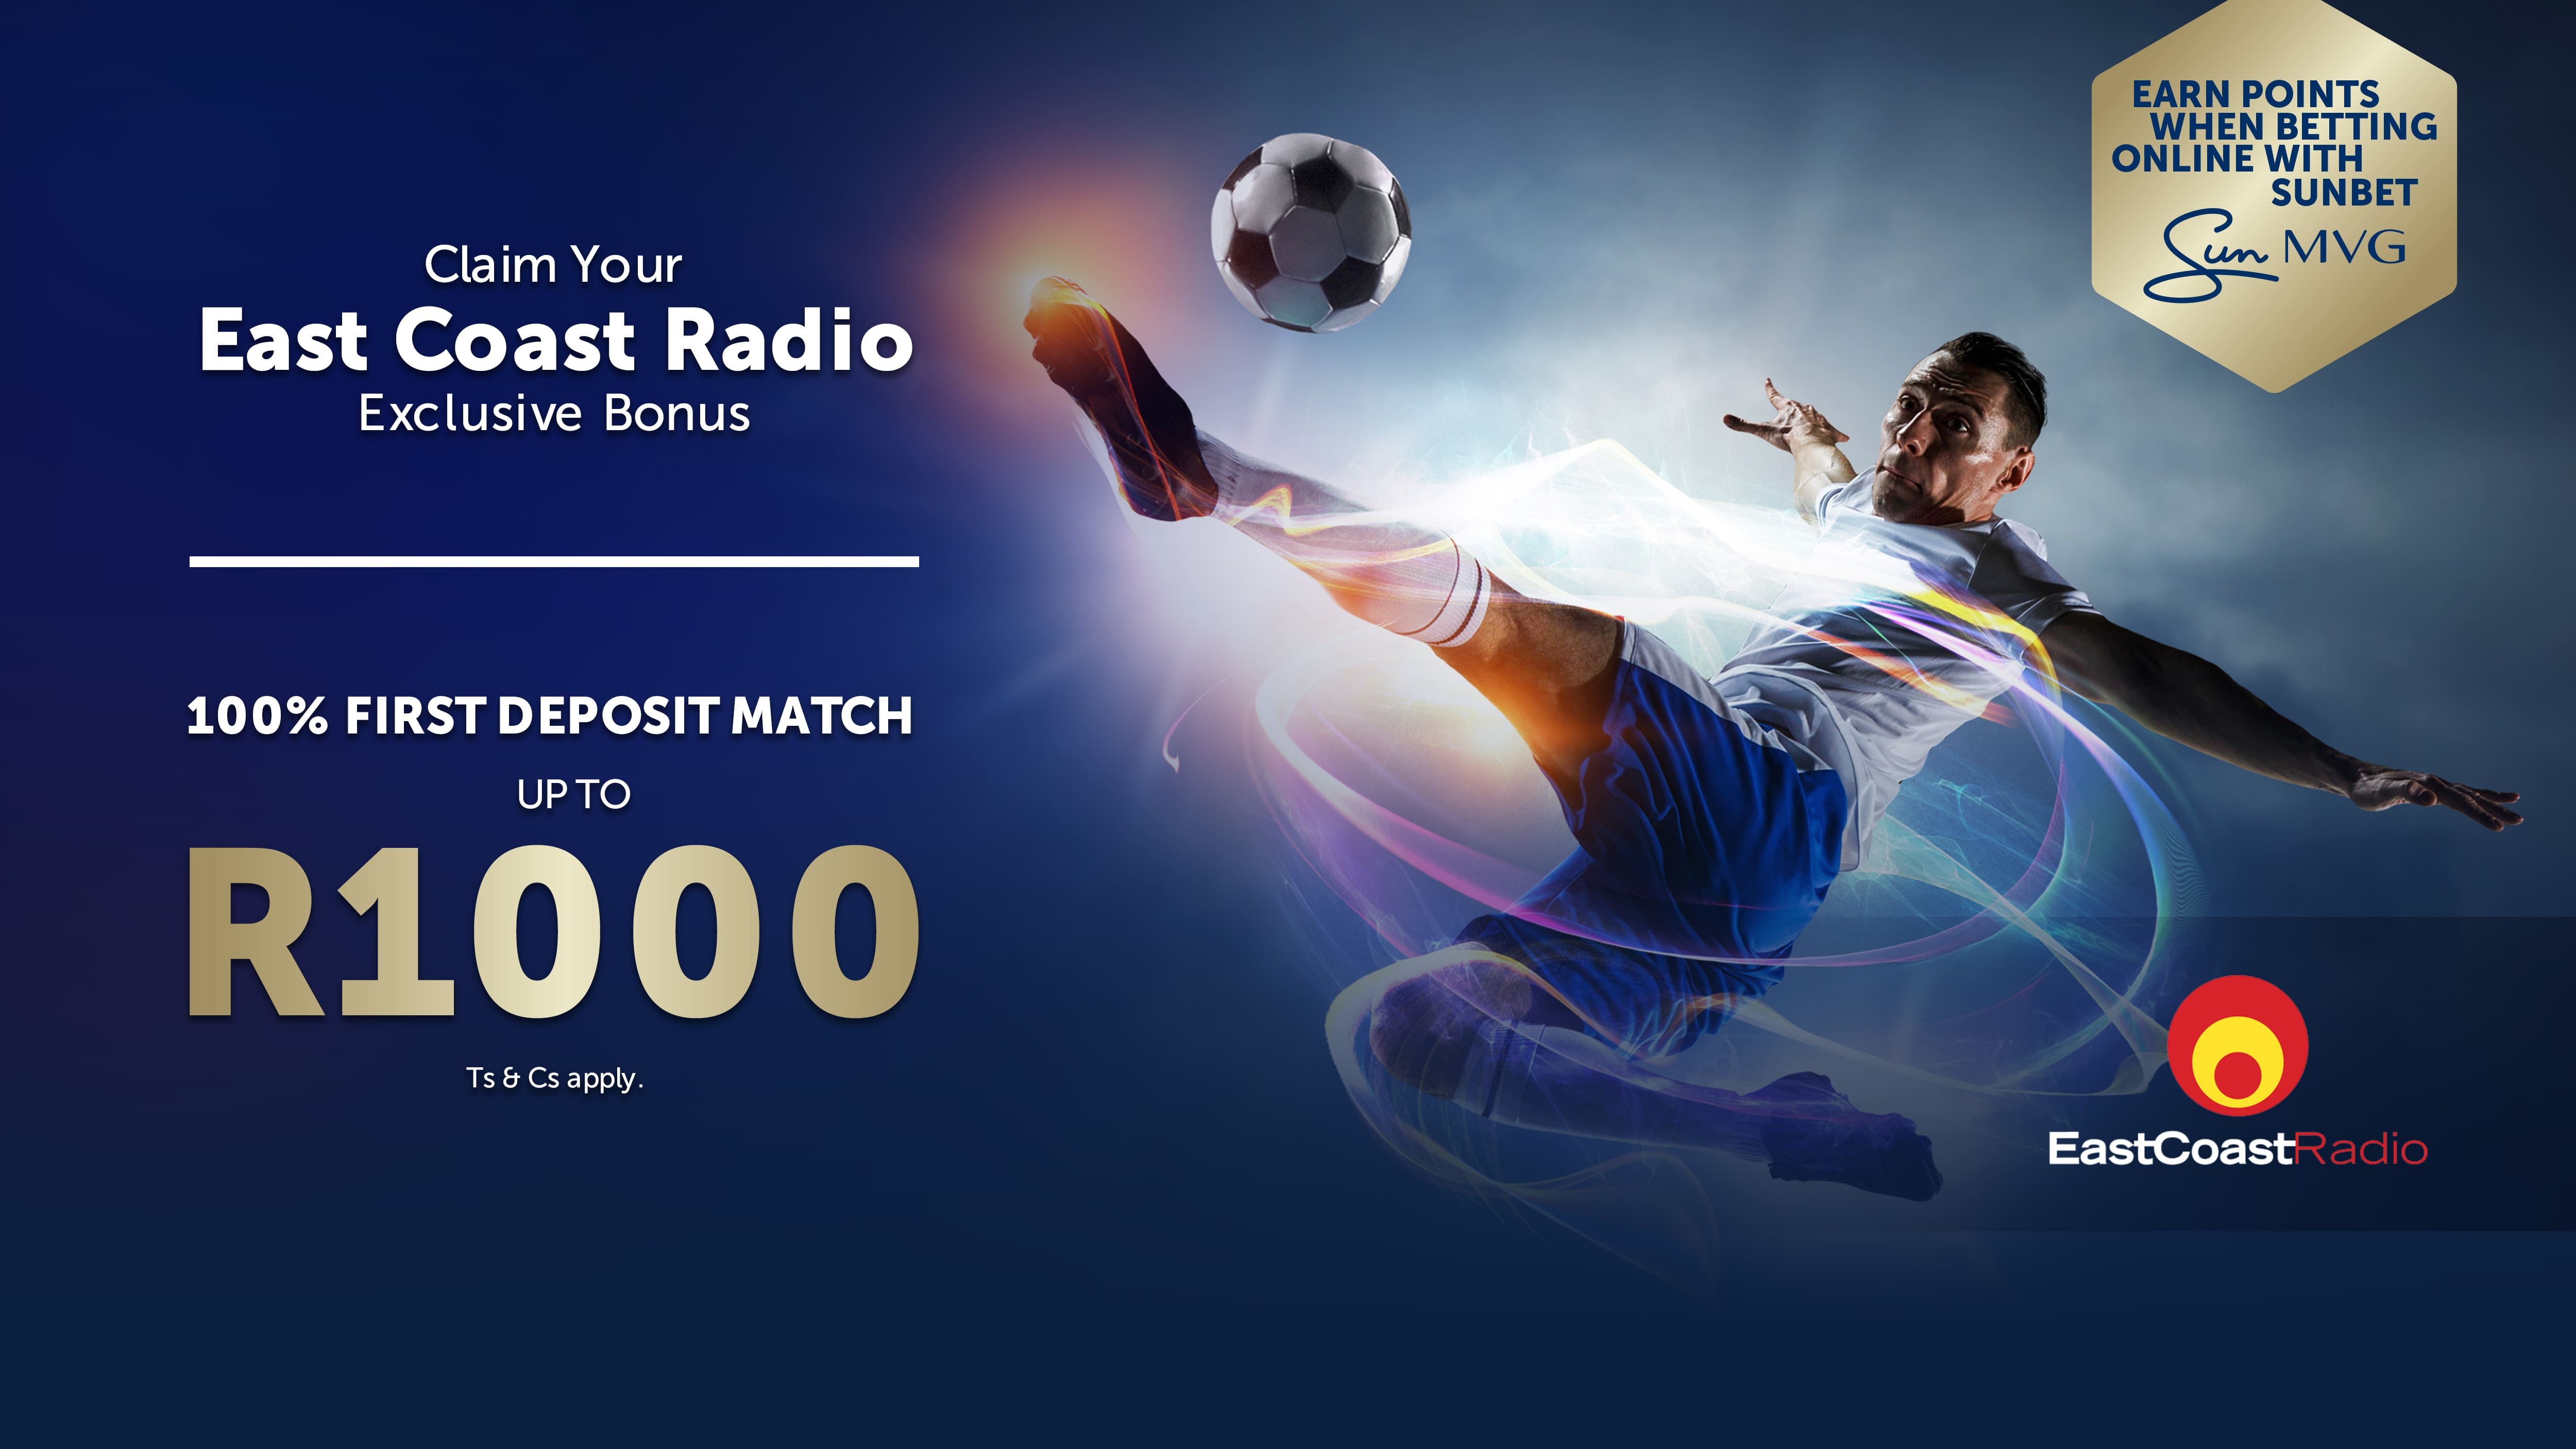 Claim Your Heart FM Exclusive Bonus | 100% 1st Match Deposit up to R1000 